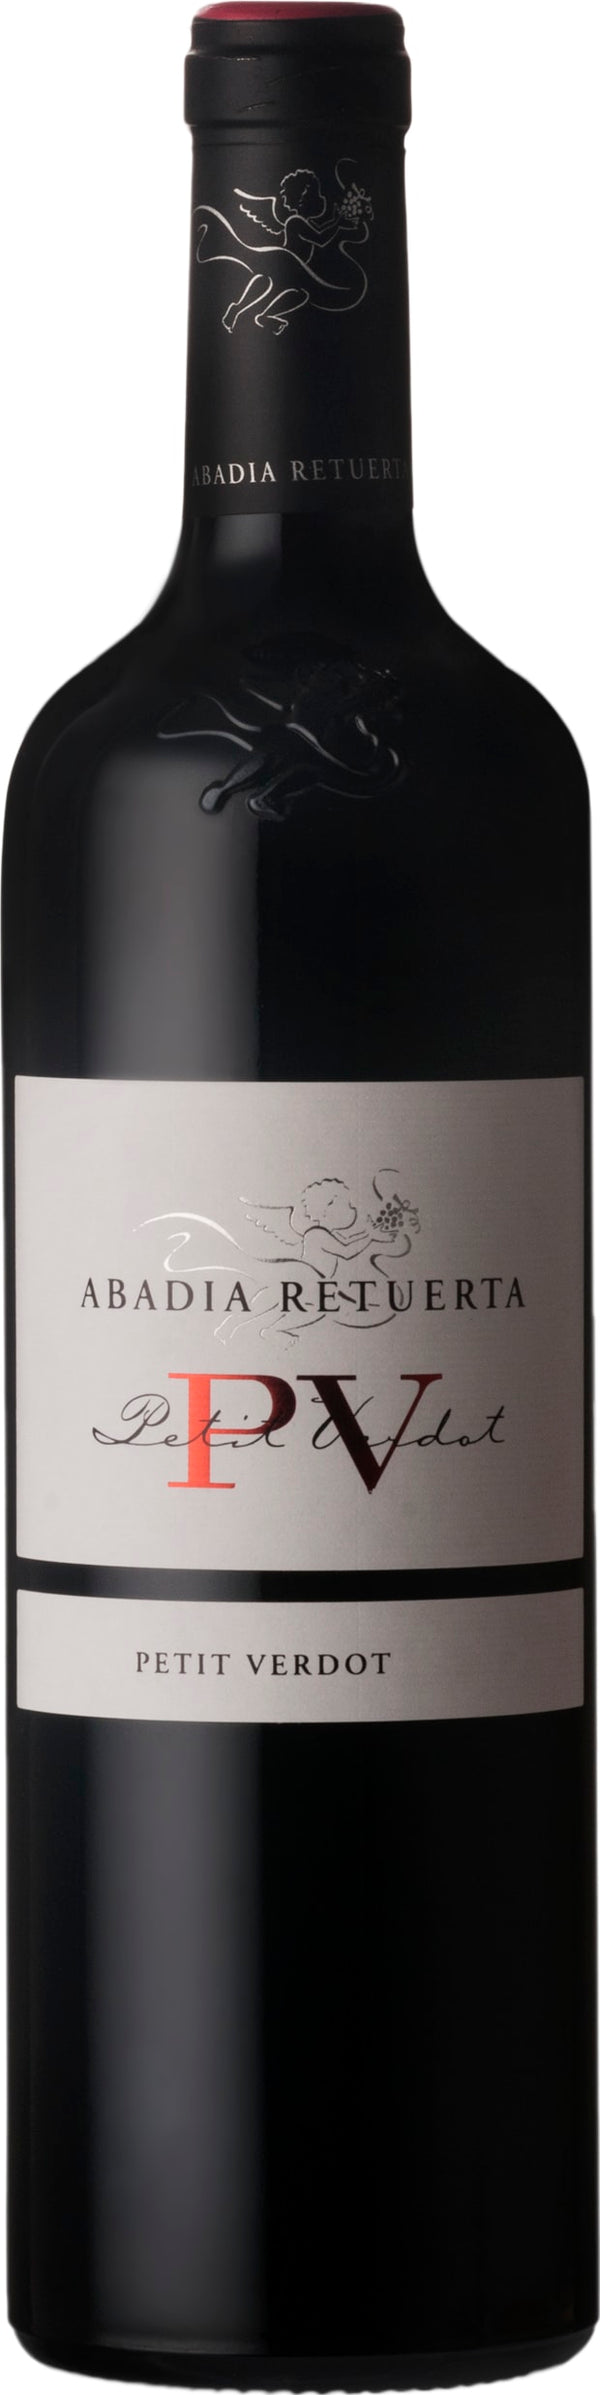 Abadia Retuerta PV Petit Verdot 2015 6x75cl - Just Wines 